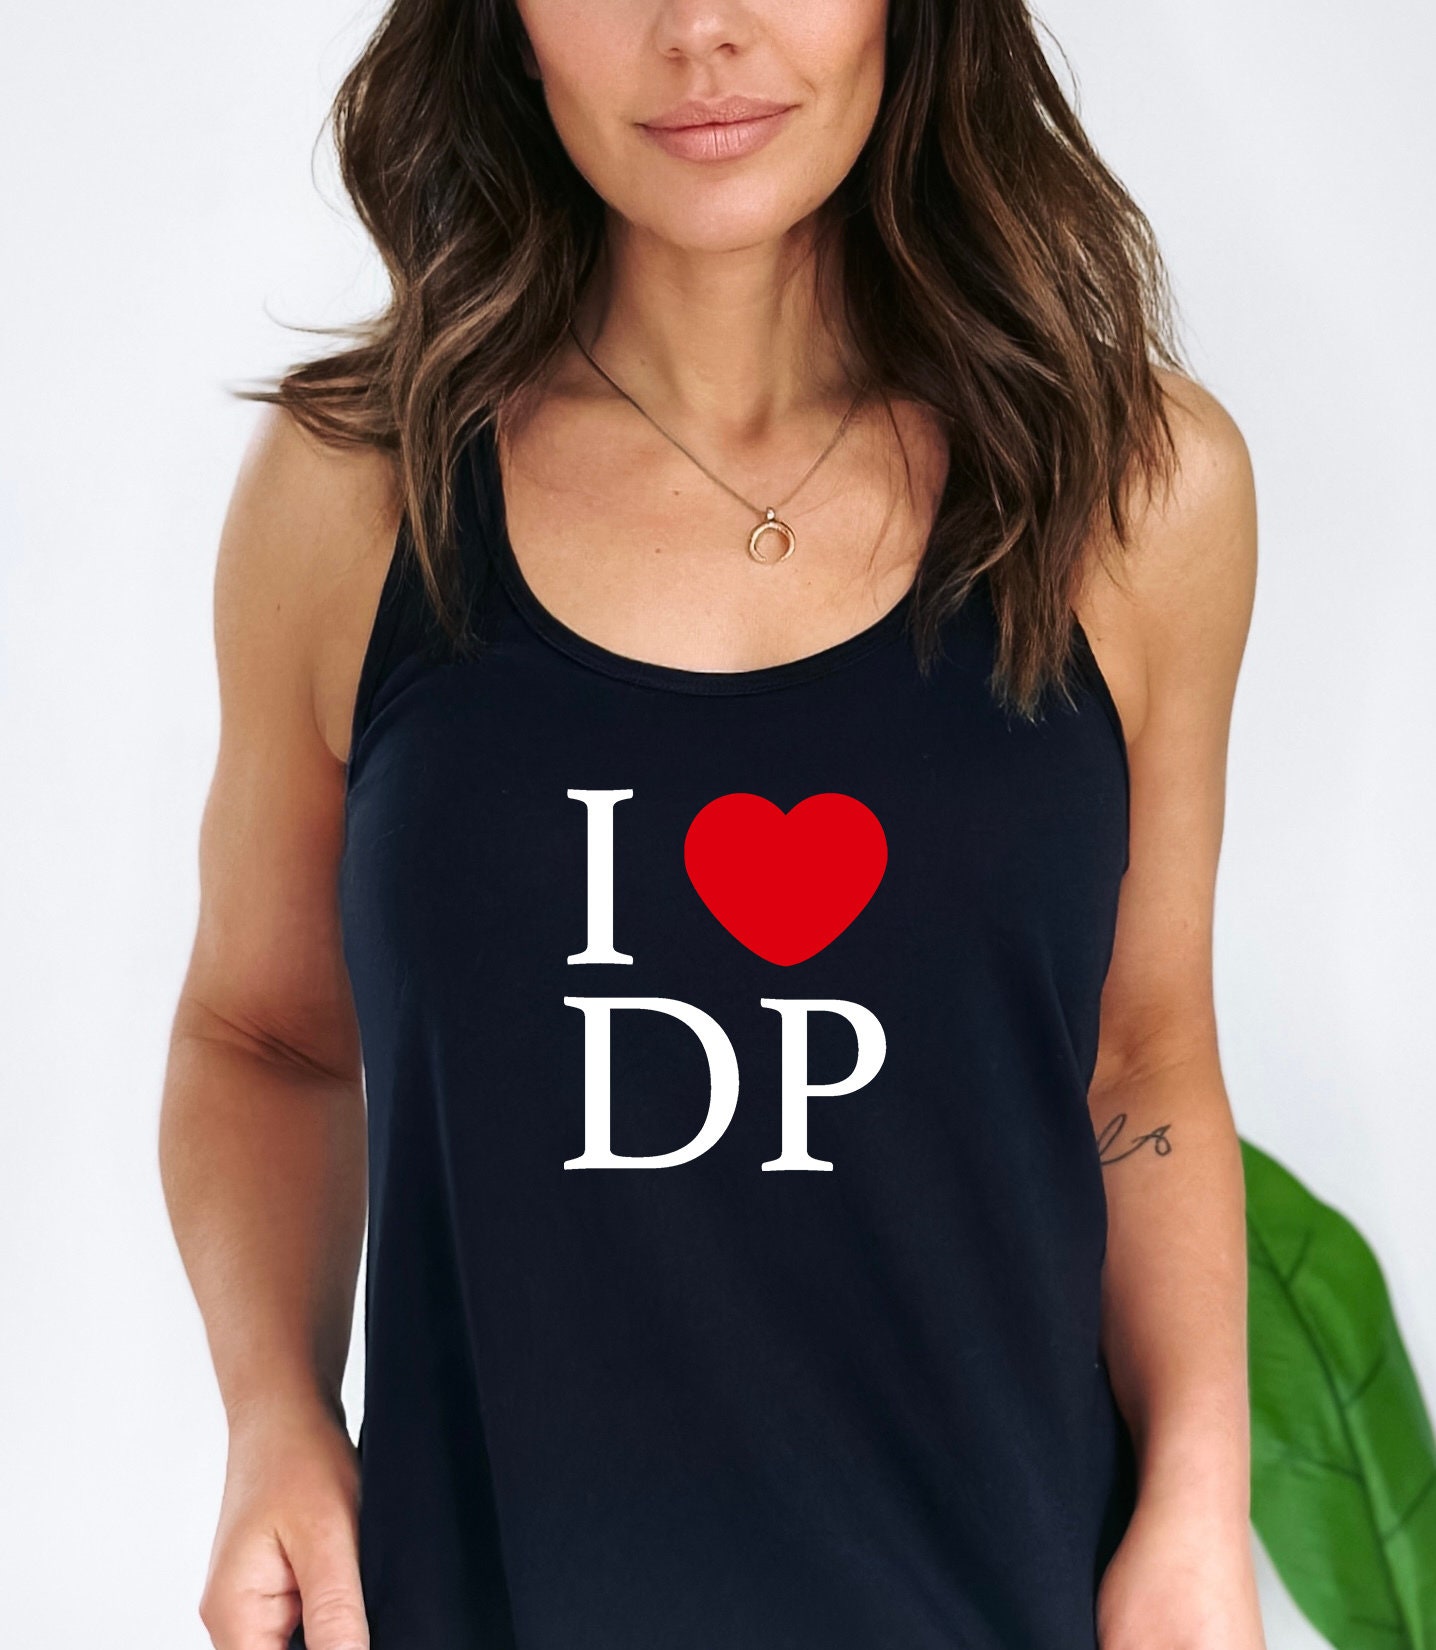 D P Shirt / I Love Double Penetration Womens Tank Top / image